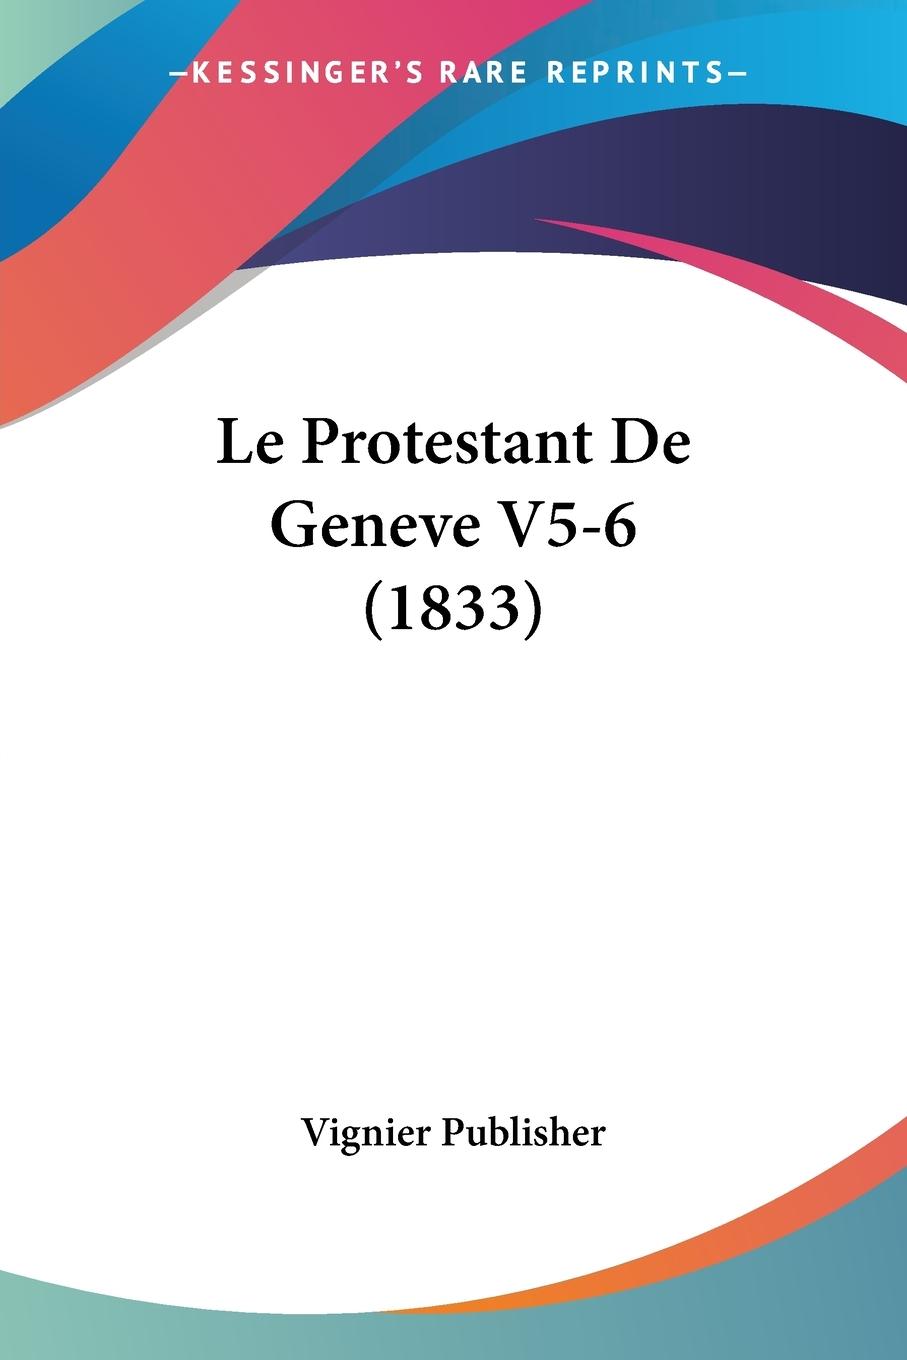 Le Protestant De Geneve V5-6 (1833) - Vignier Publisher